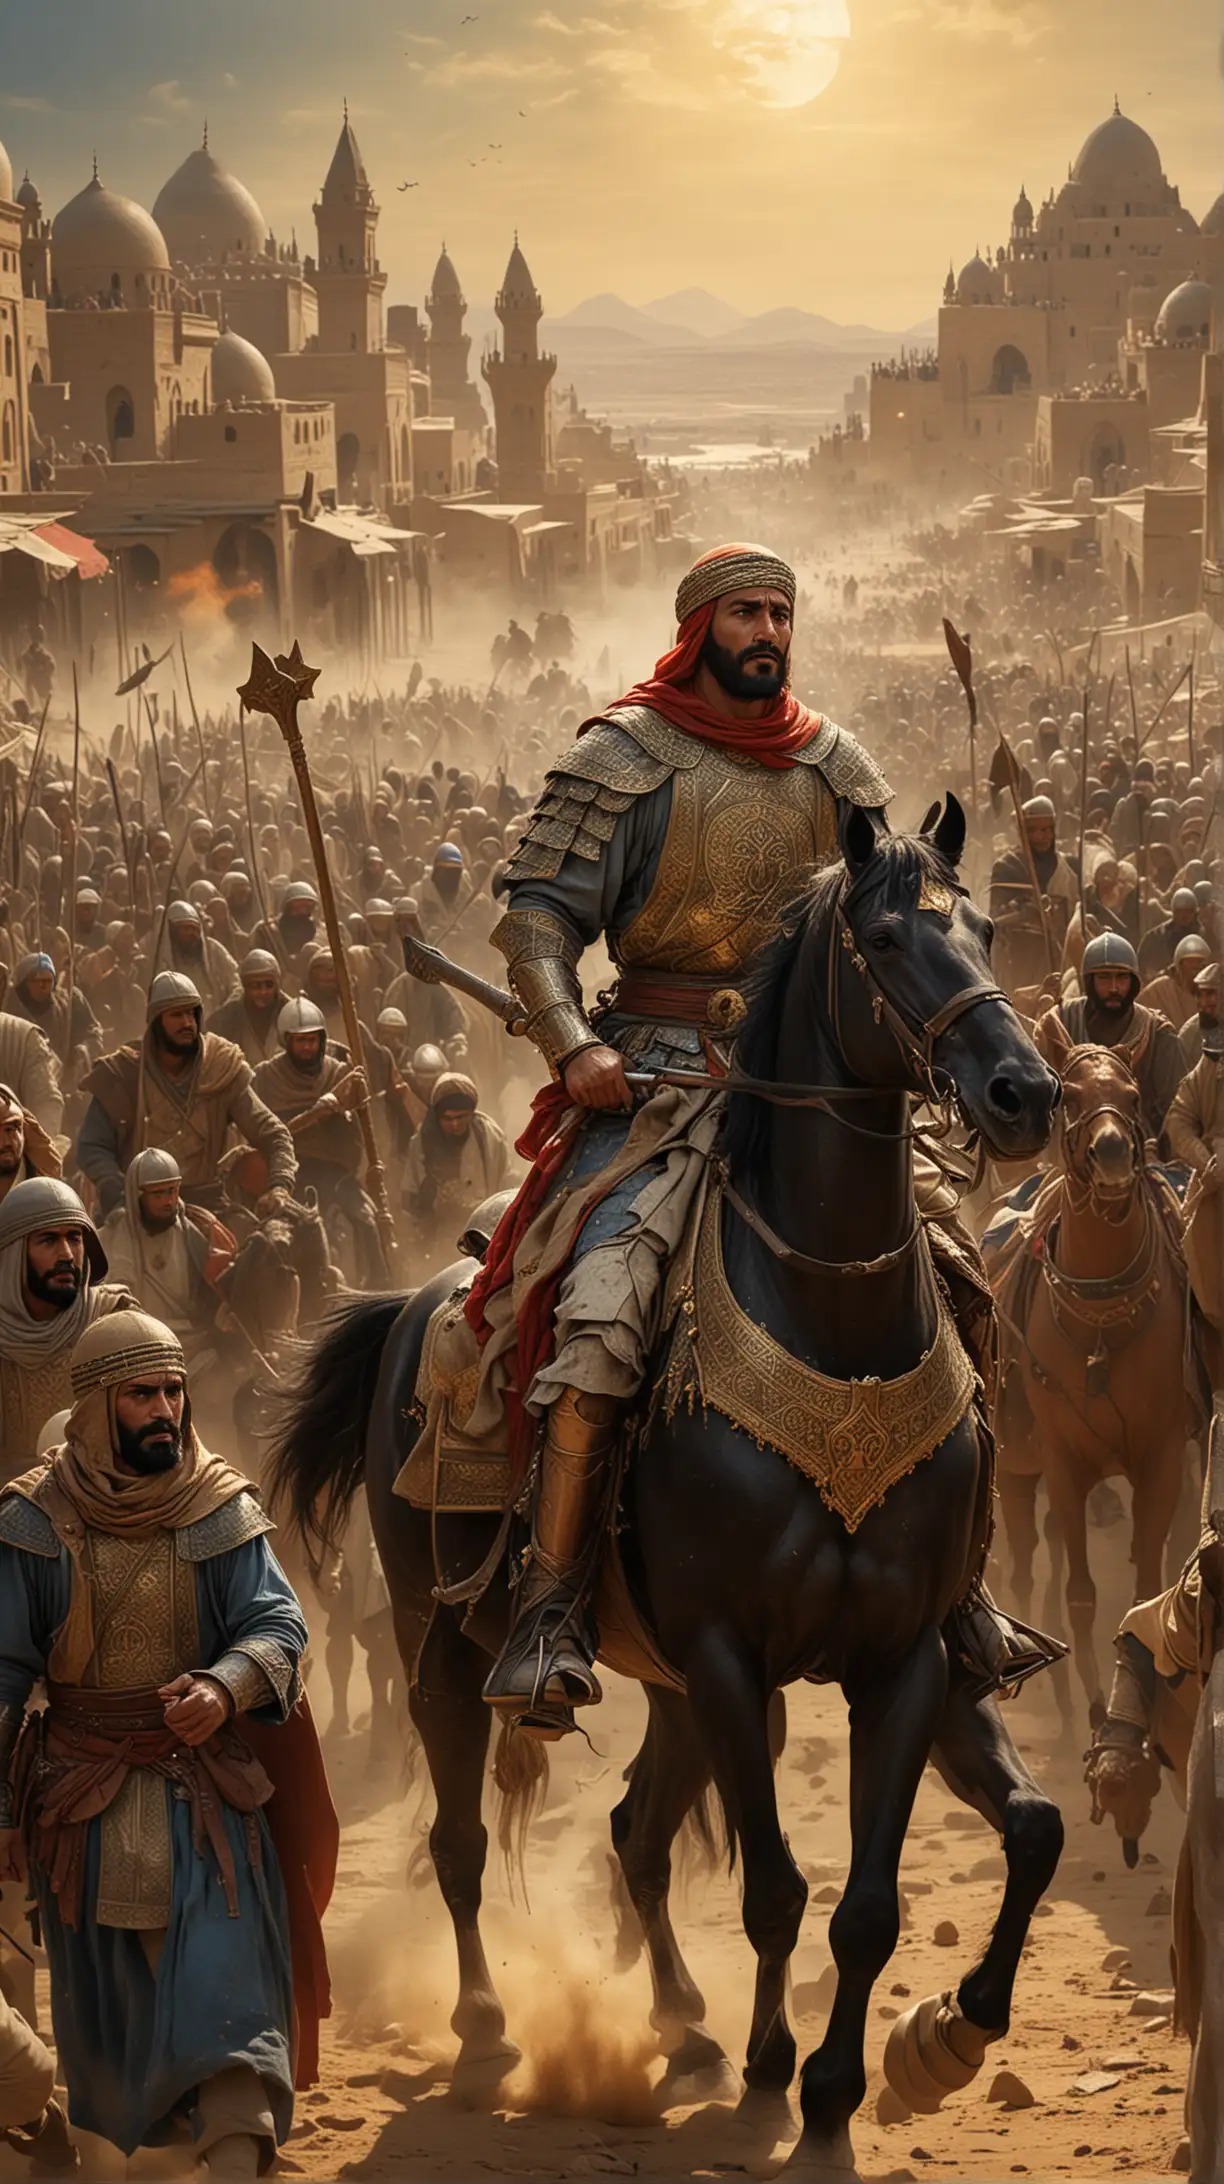 Sultan Baybars in 13thCentury Mamluk Armor Battle of Ain Jalut and Medieval Cairo